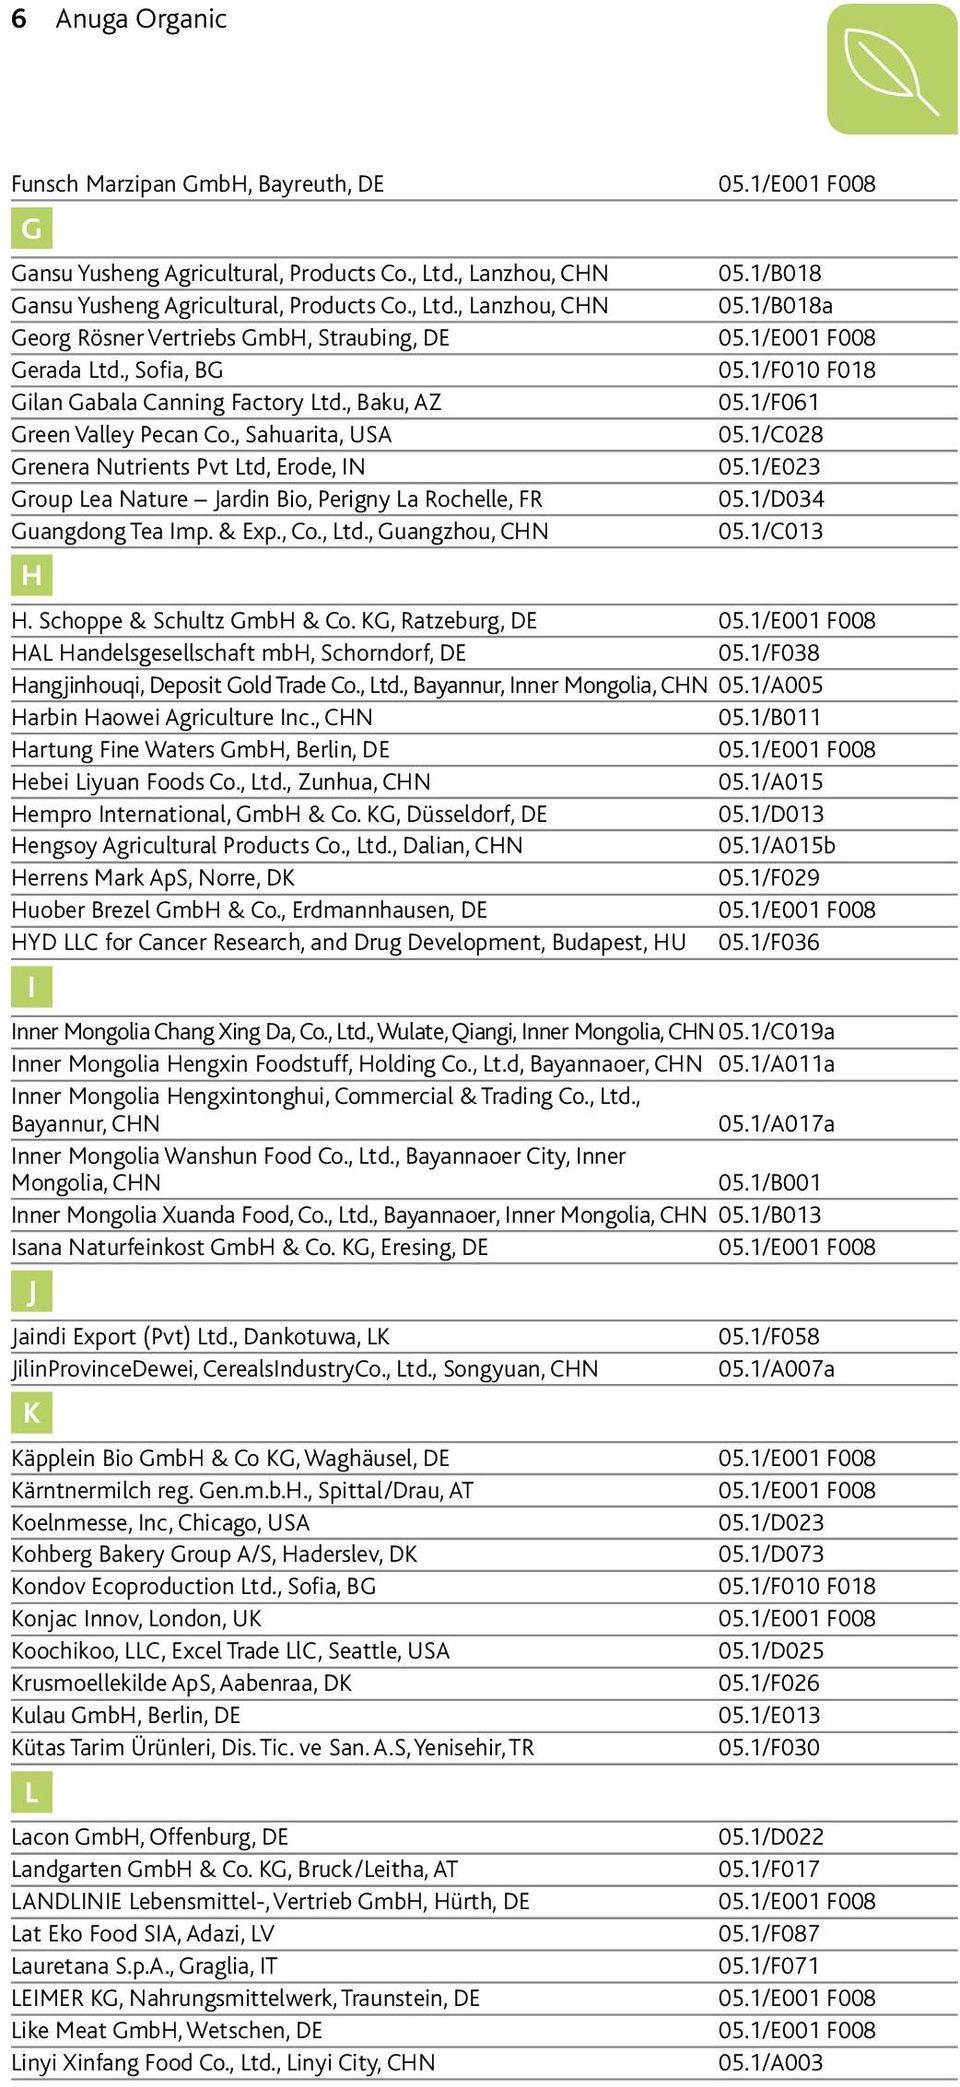 , Sahuarita, USA Grenera Nutrients Pvt Ltd, Erode, IN Group Lea Nature Jardin Bio, Perigny La Rochelle, FR Guangdong Tea Imp. & Exp., Co., Ltd., Guangzhou, CHN H 05.1/B018 05.1/B018a 05.